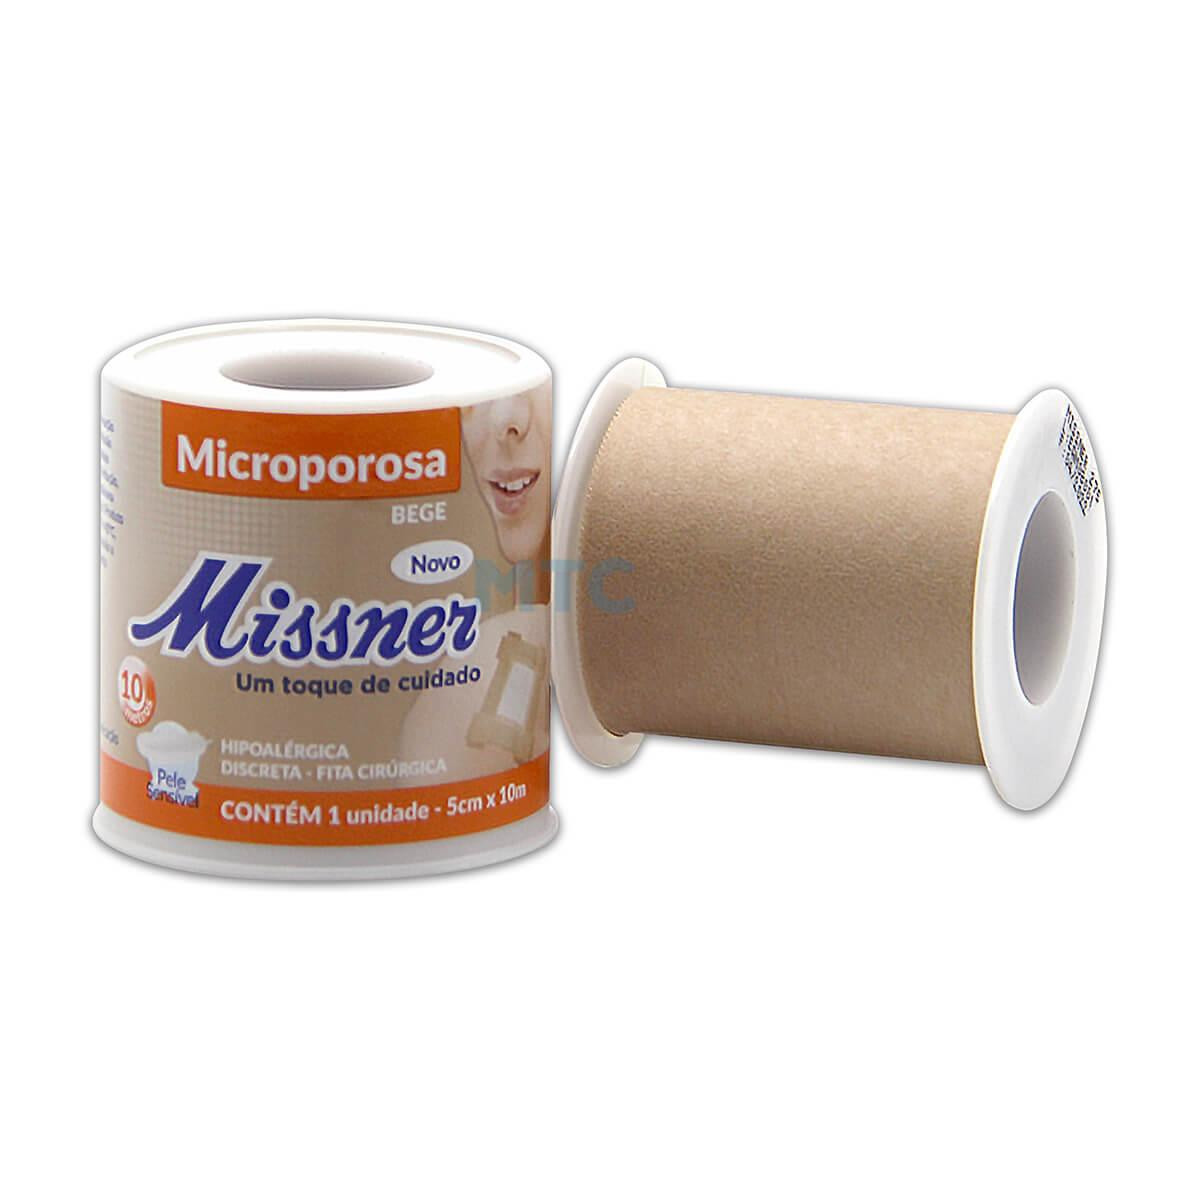 Microporosa Missner 5x10 - Bege